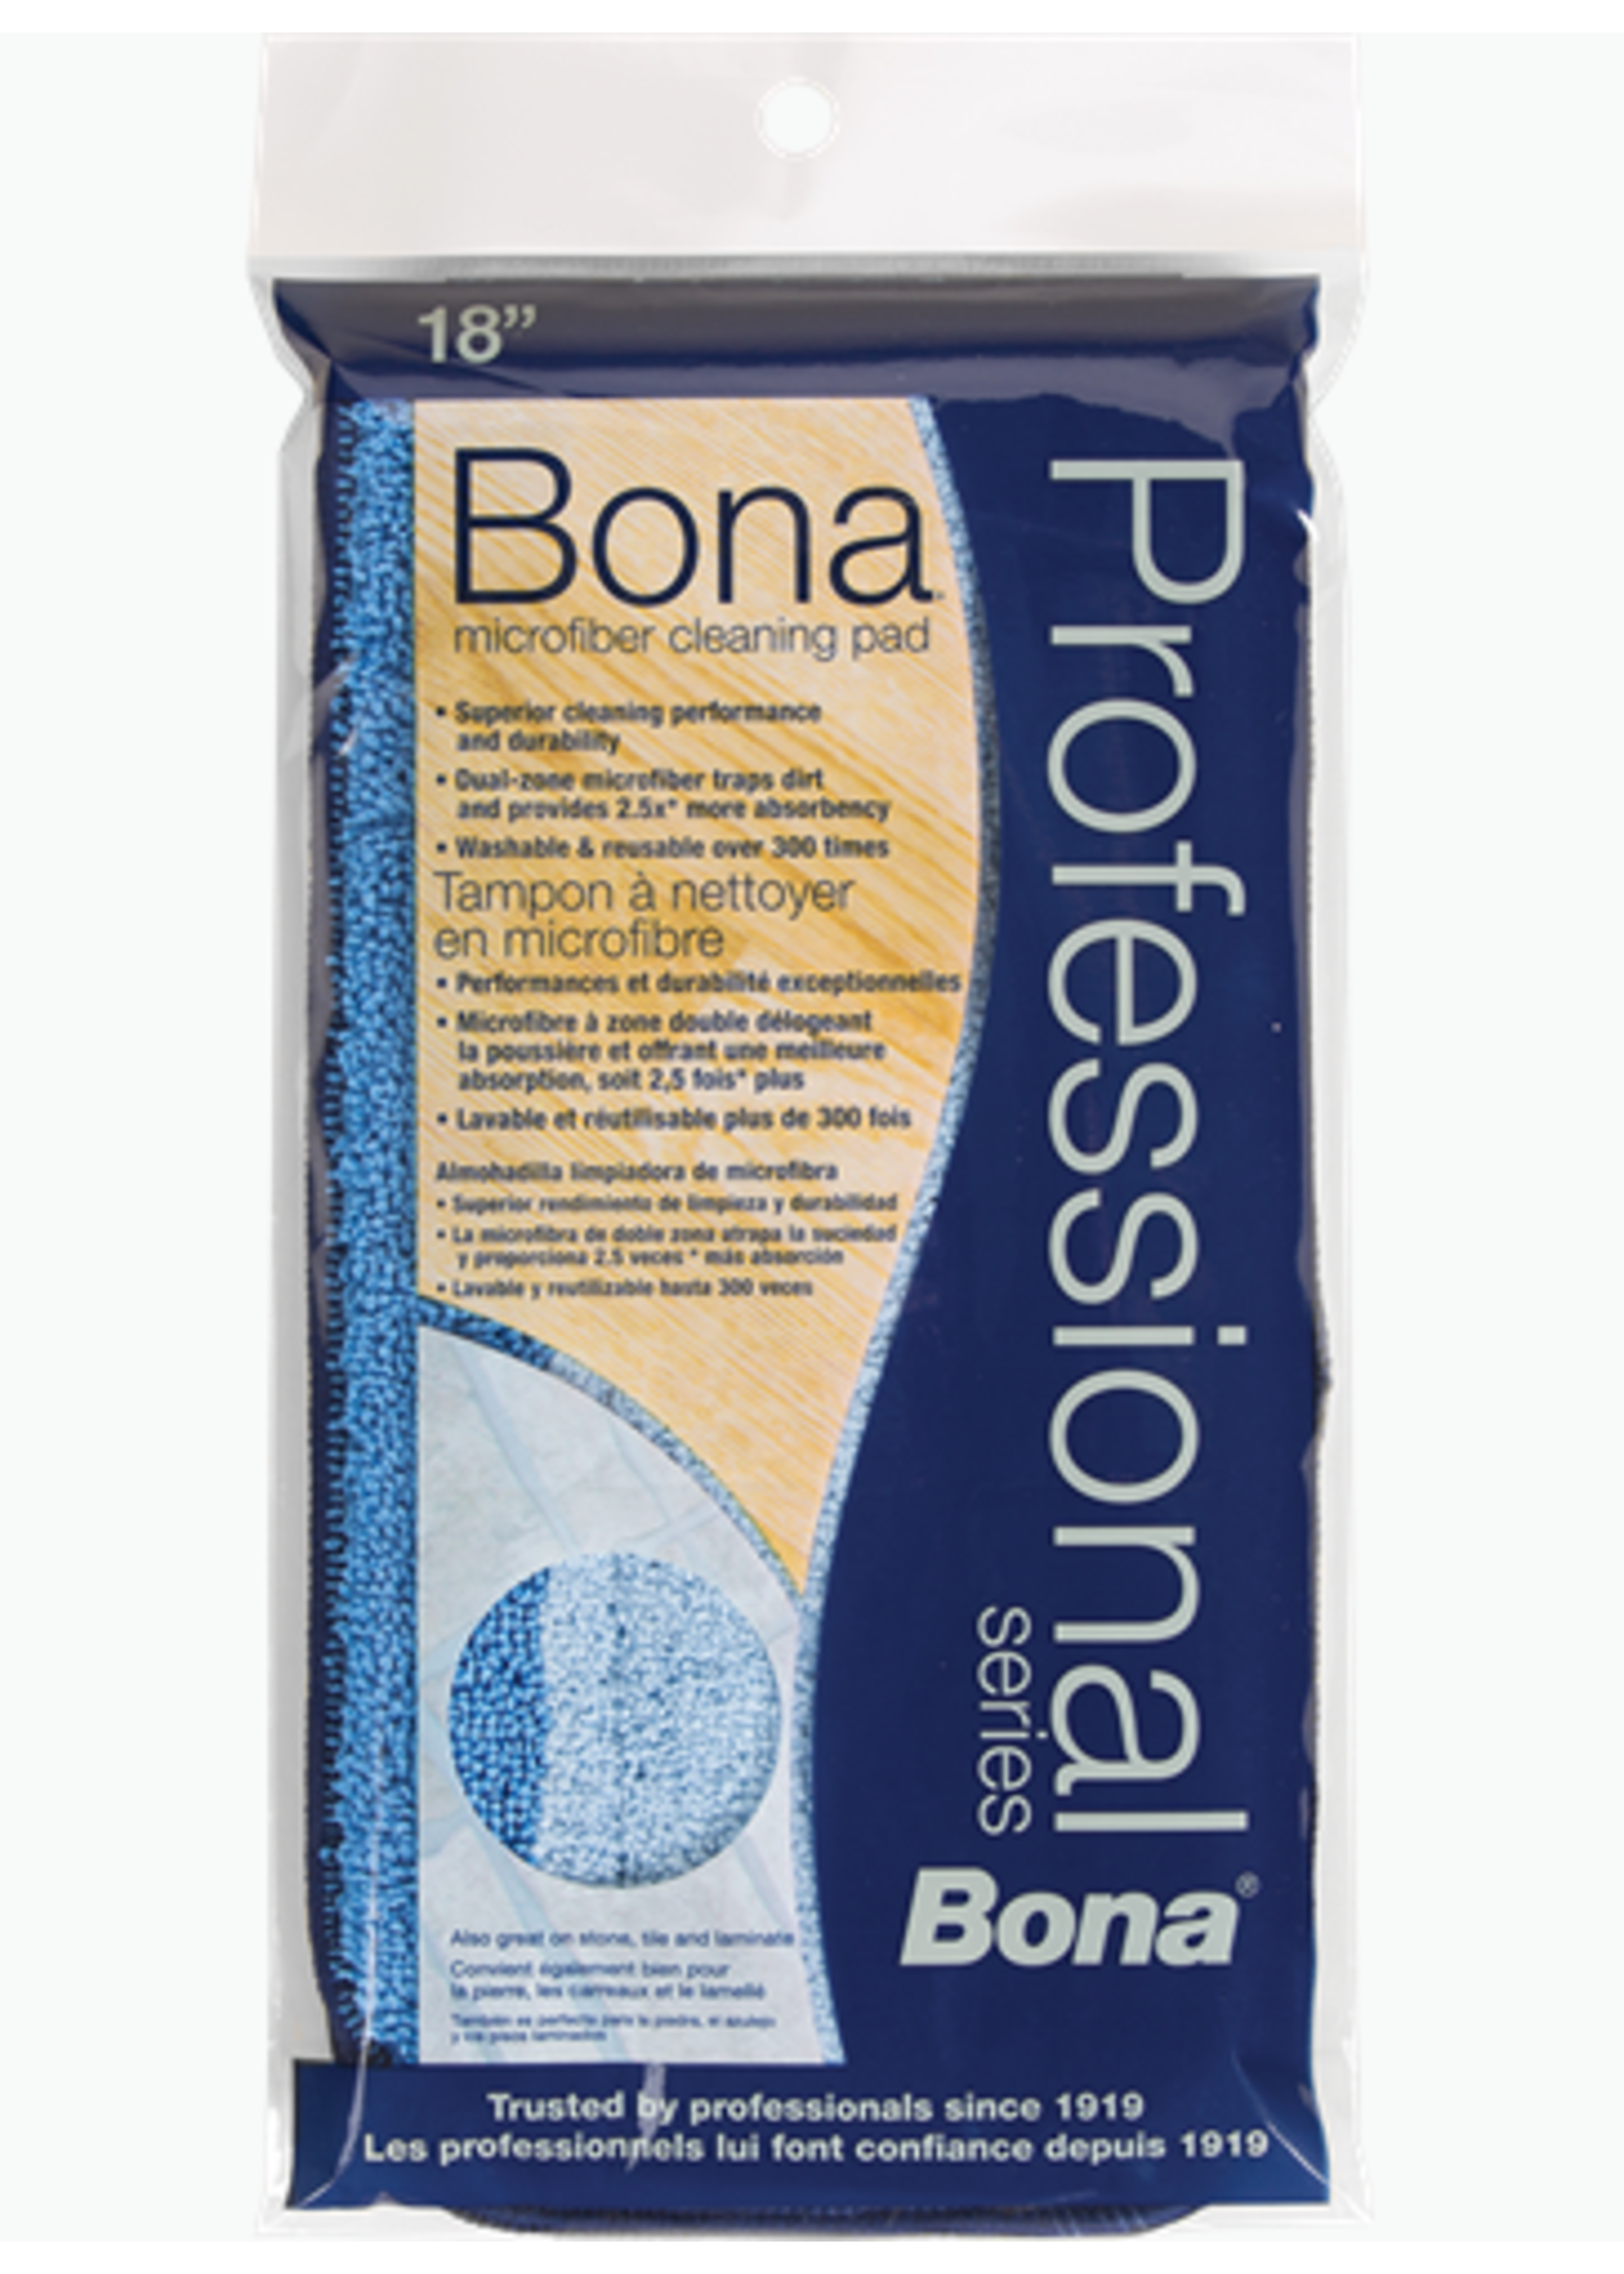 Bona Bona 18 in microfiber cleaning pad